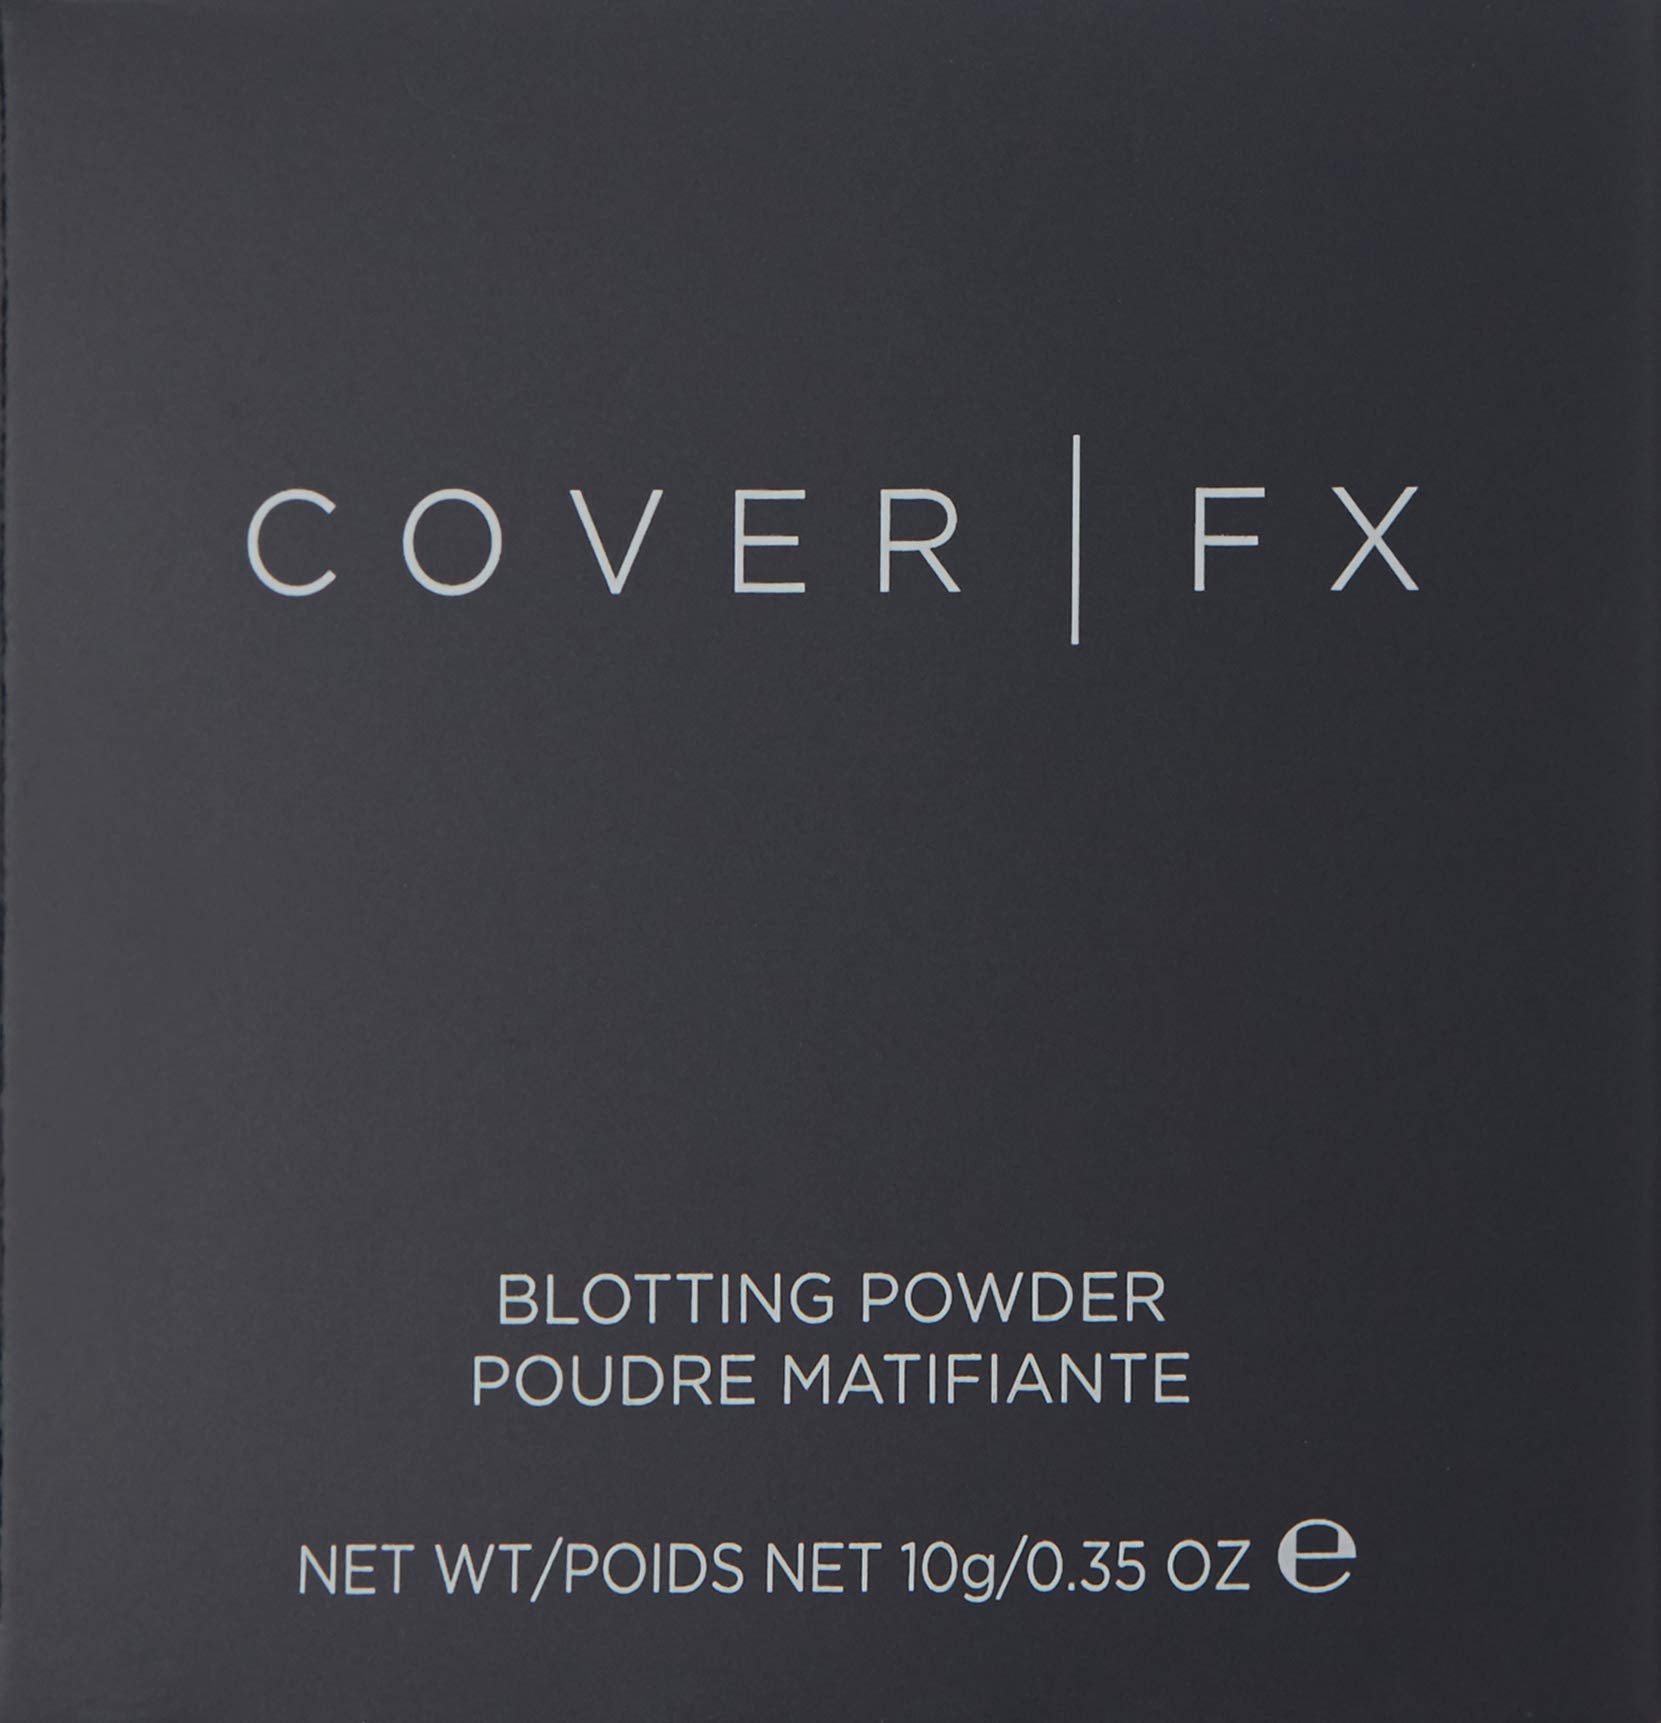 Polvo secante COVER FX